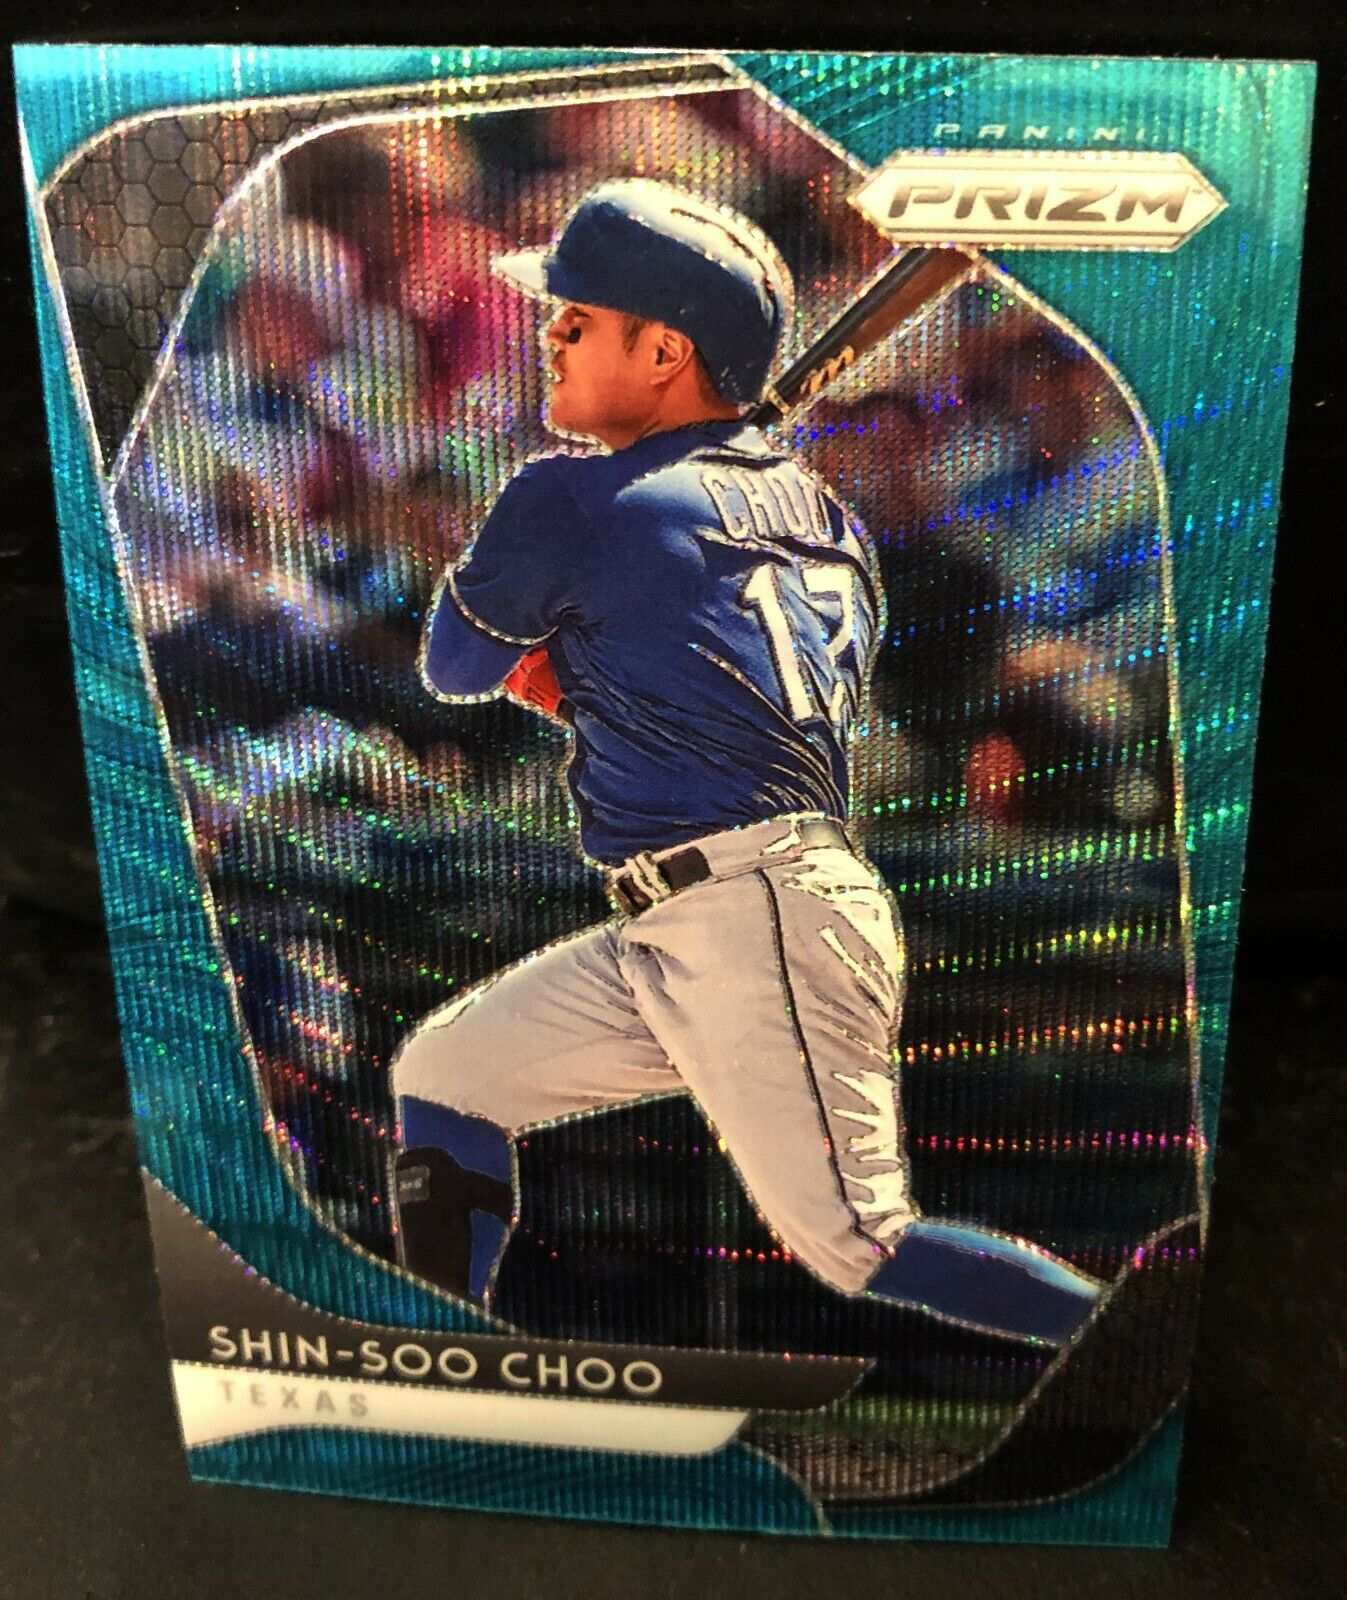 Shin-Soo Choo(Texas Rangers)2020 Panini Prizm Teal Wave Baseball Card